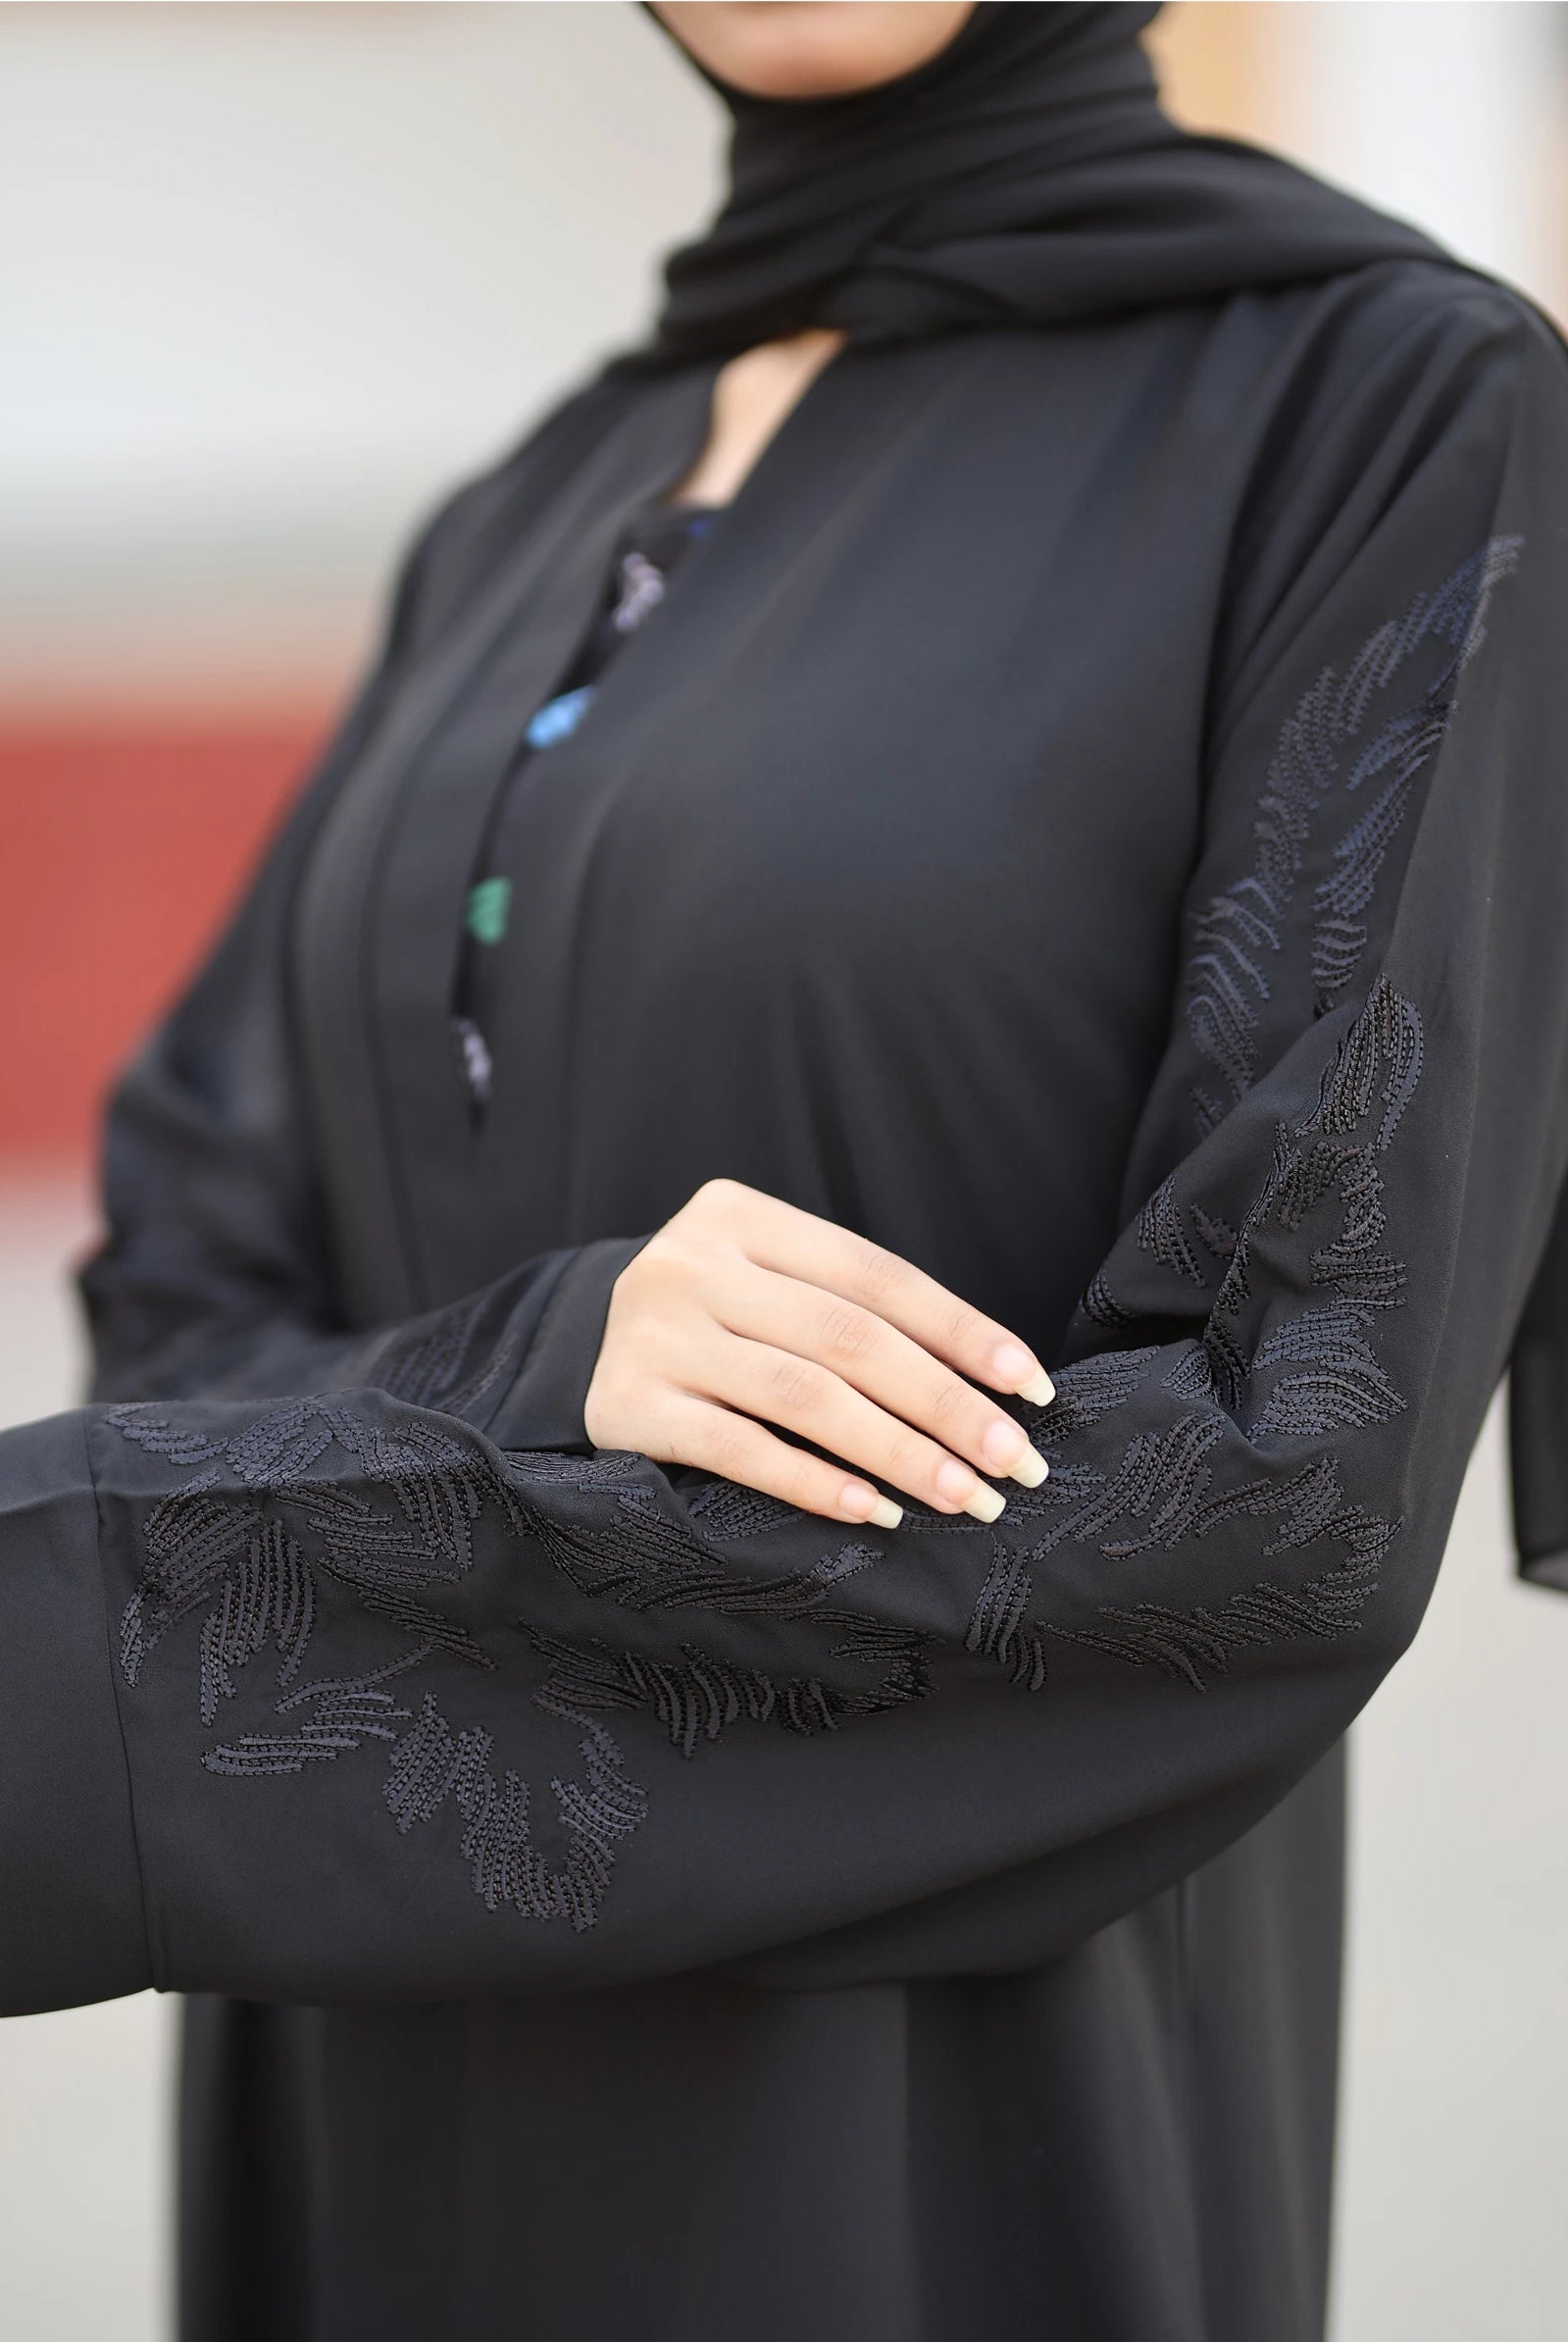 black open abaya